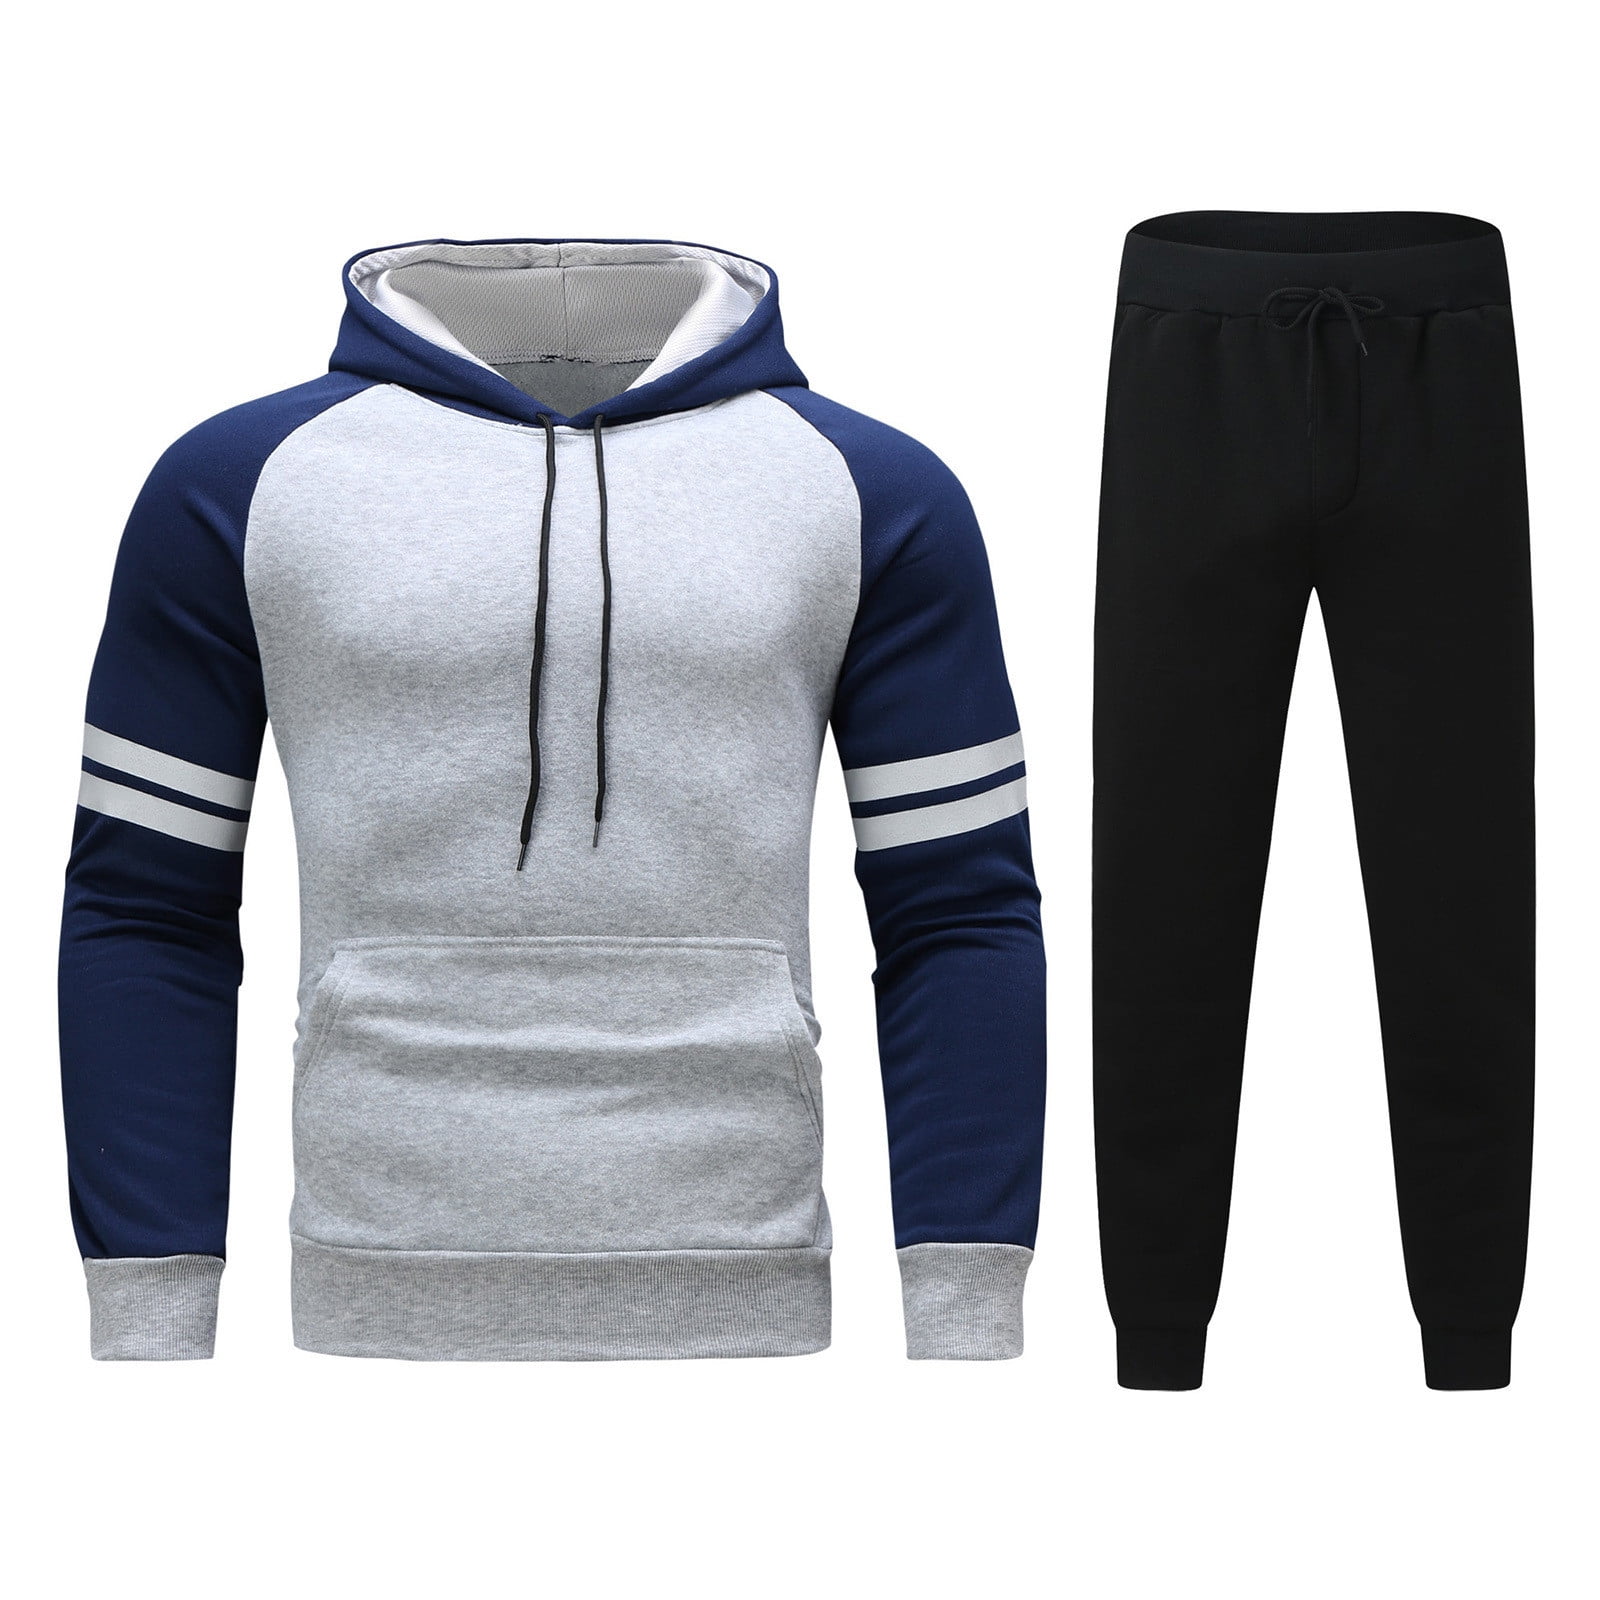 wjiNFDFG Track Suits Set for Men, Athletic Outfits Jogging Suits Workout  Sweatshirt+ Jogger Pants Set Breathable at  Men's Clothing store